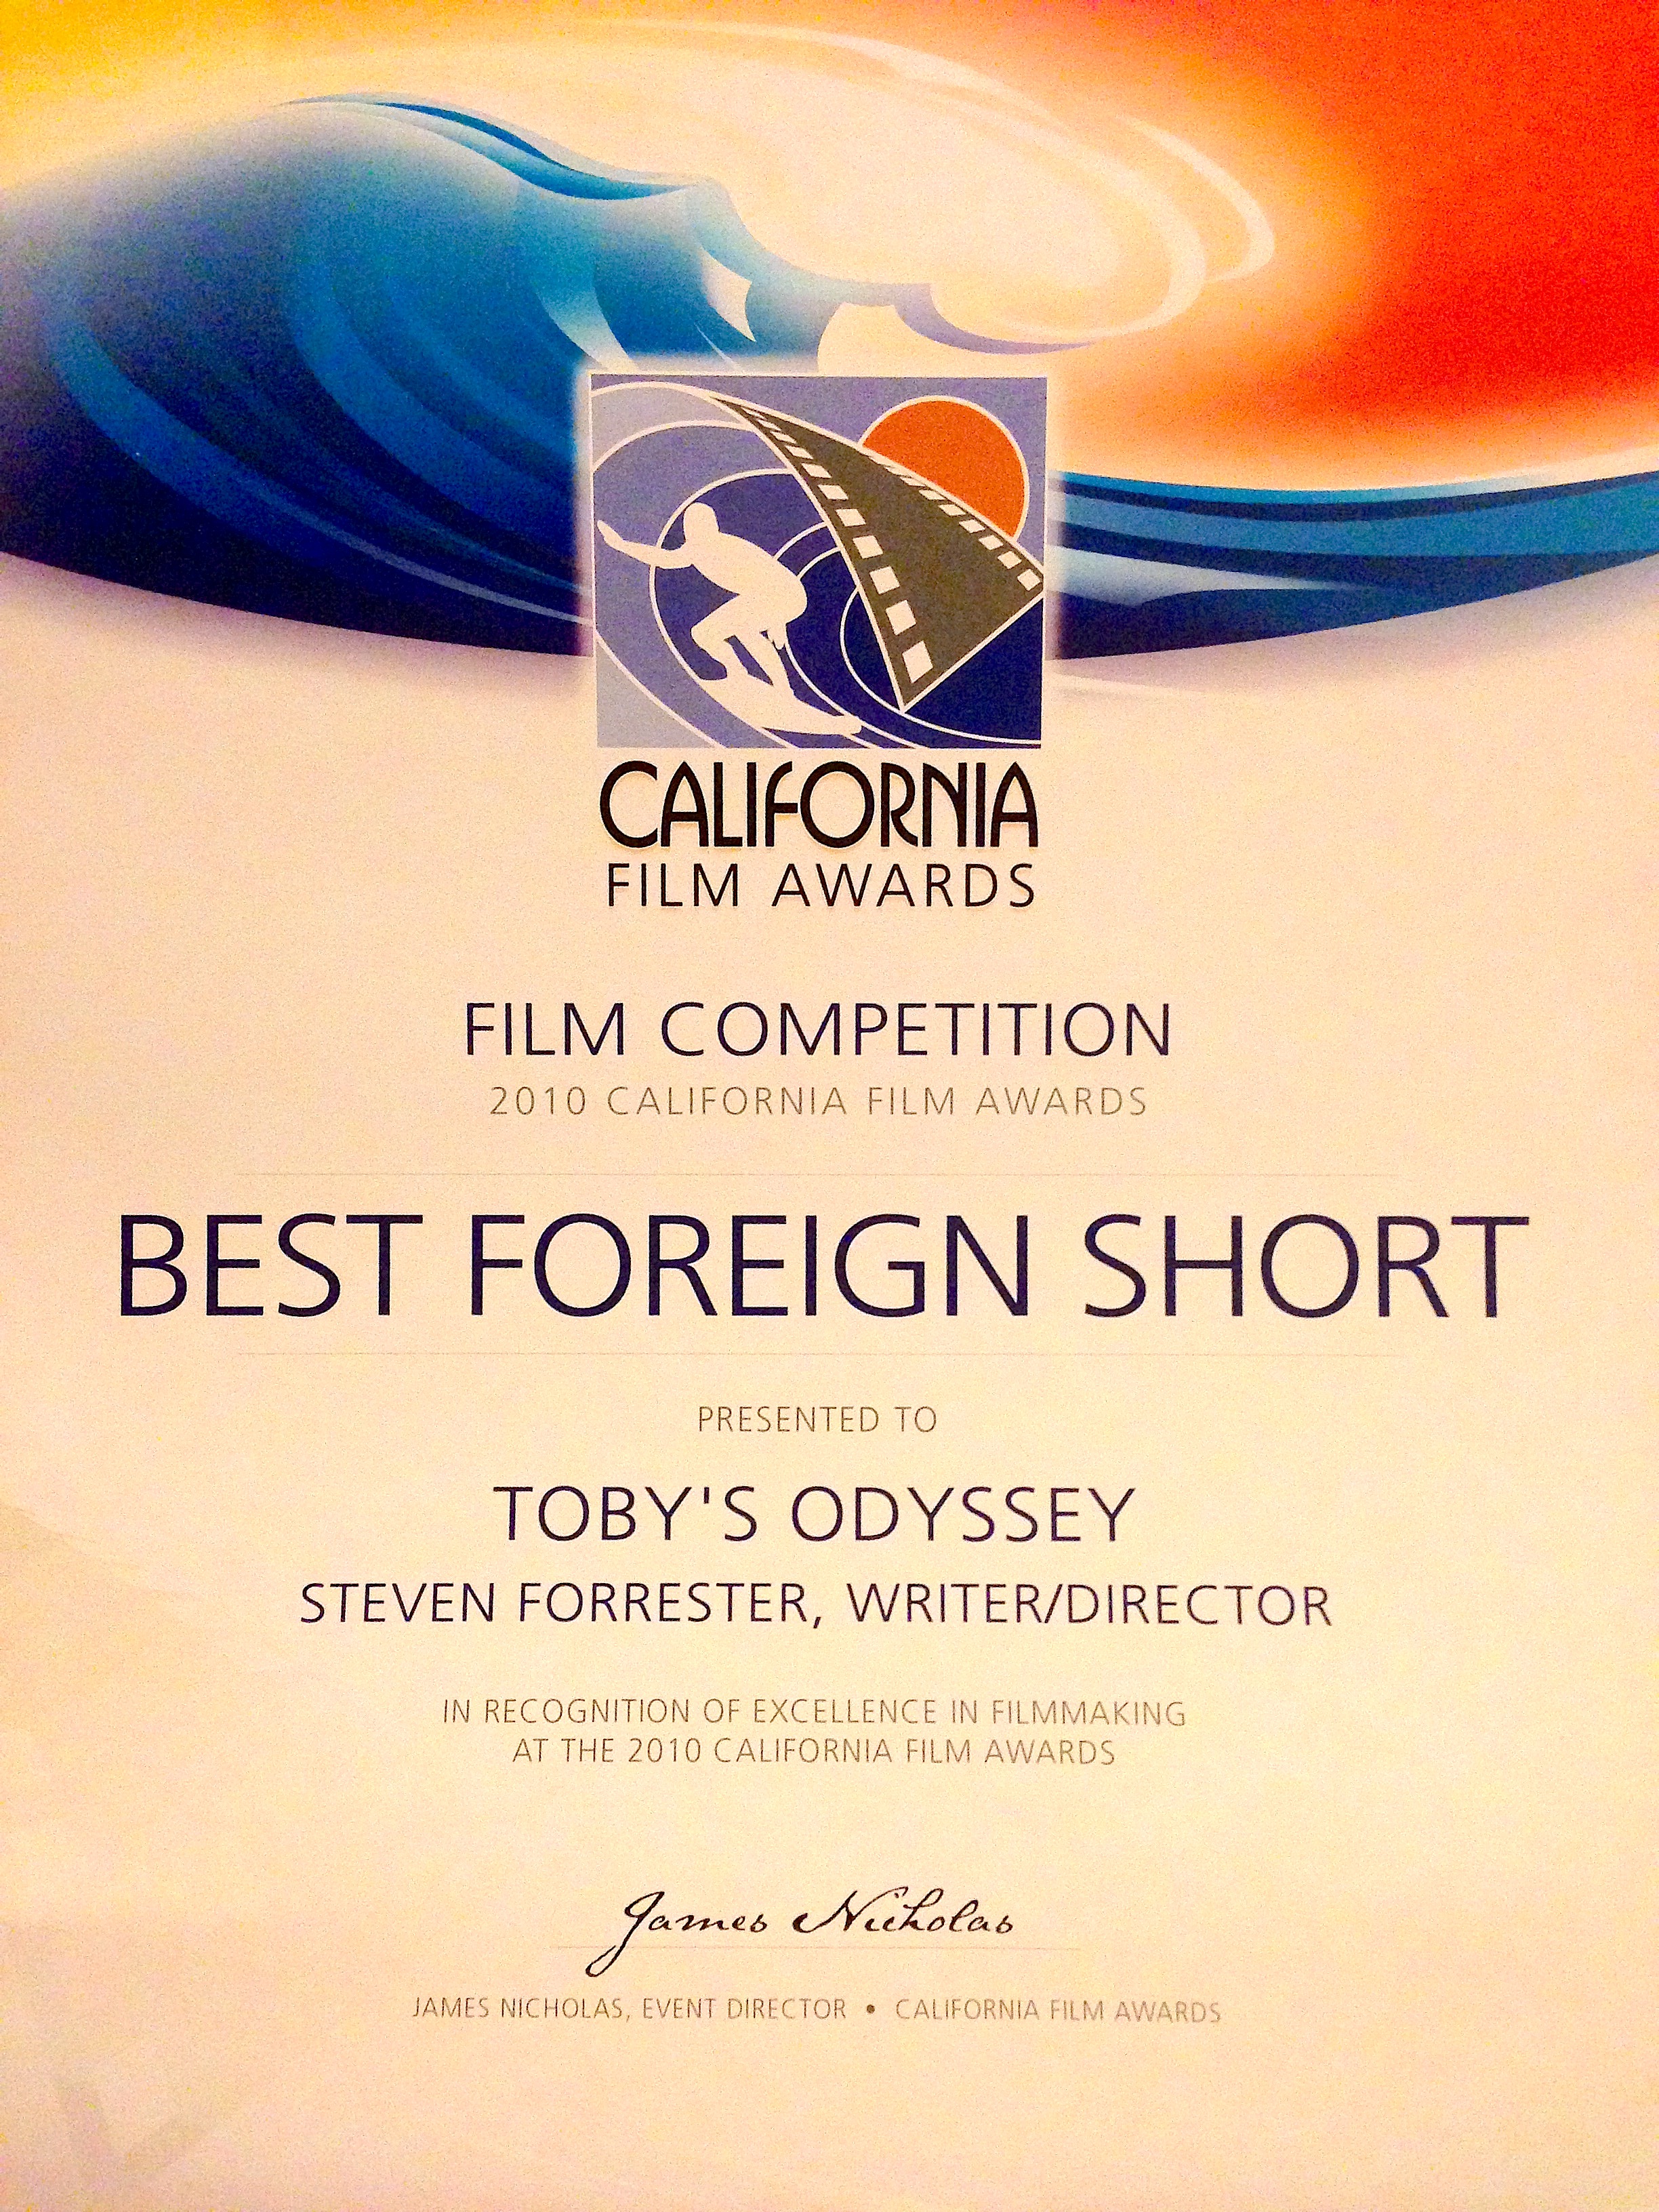 Toby's Odyssey wins California Film Award.